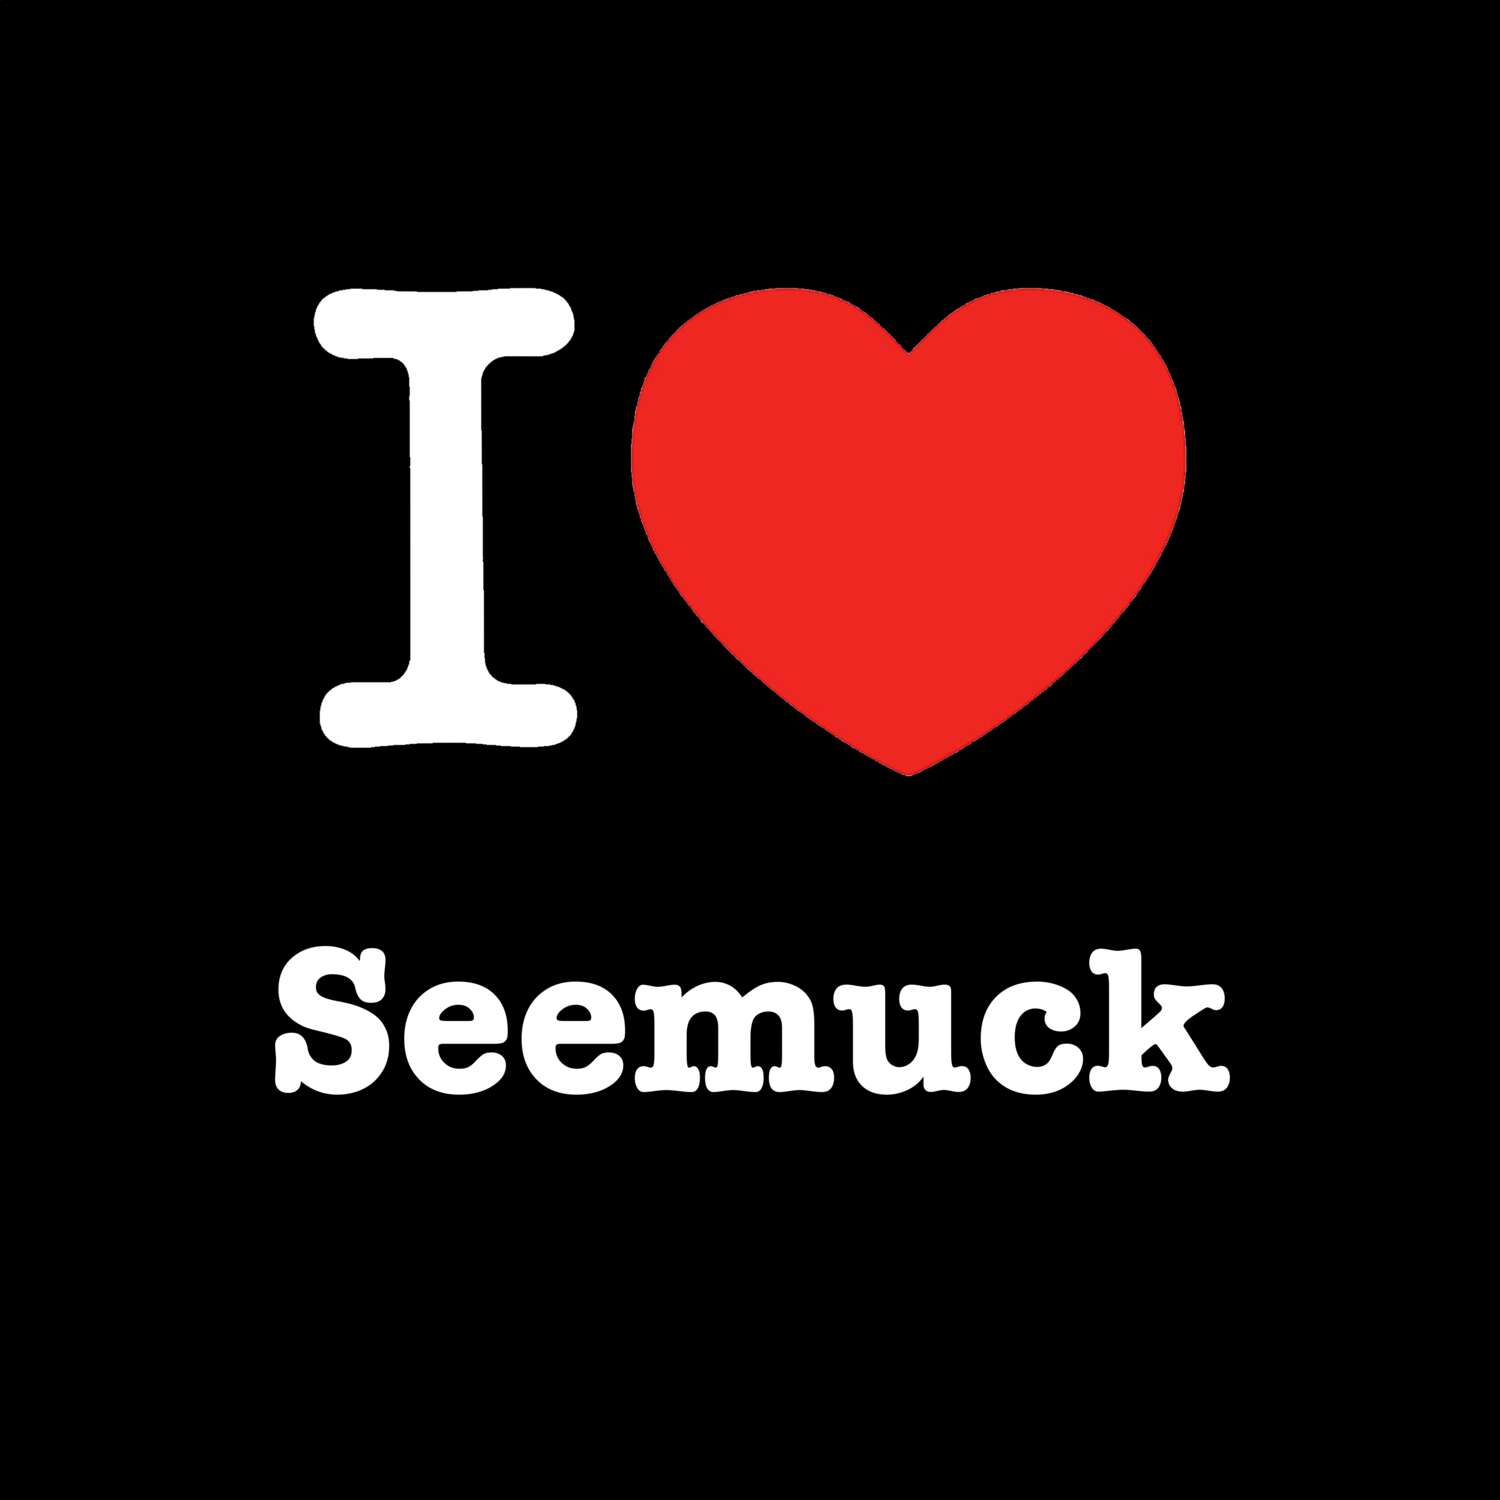 Seemuck T-Shirt »I love«